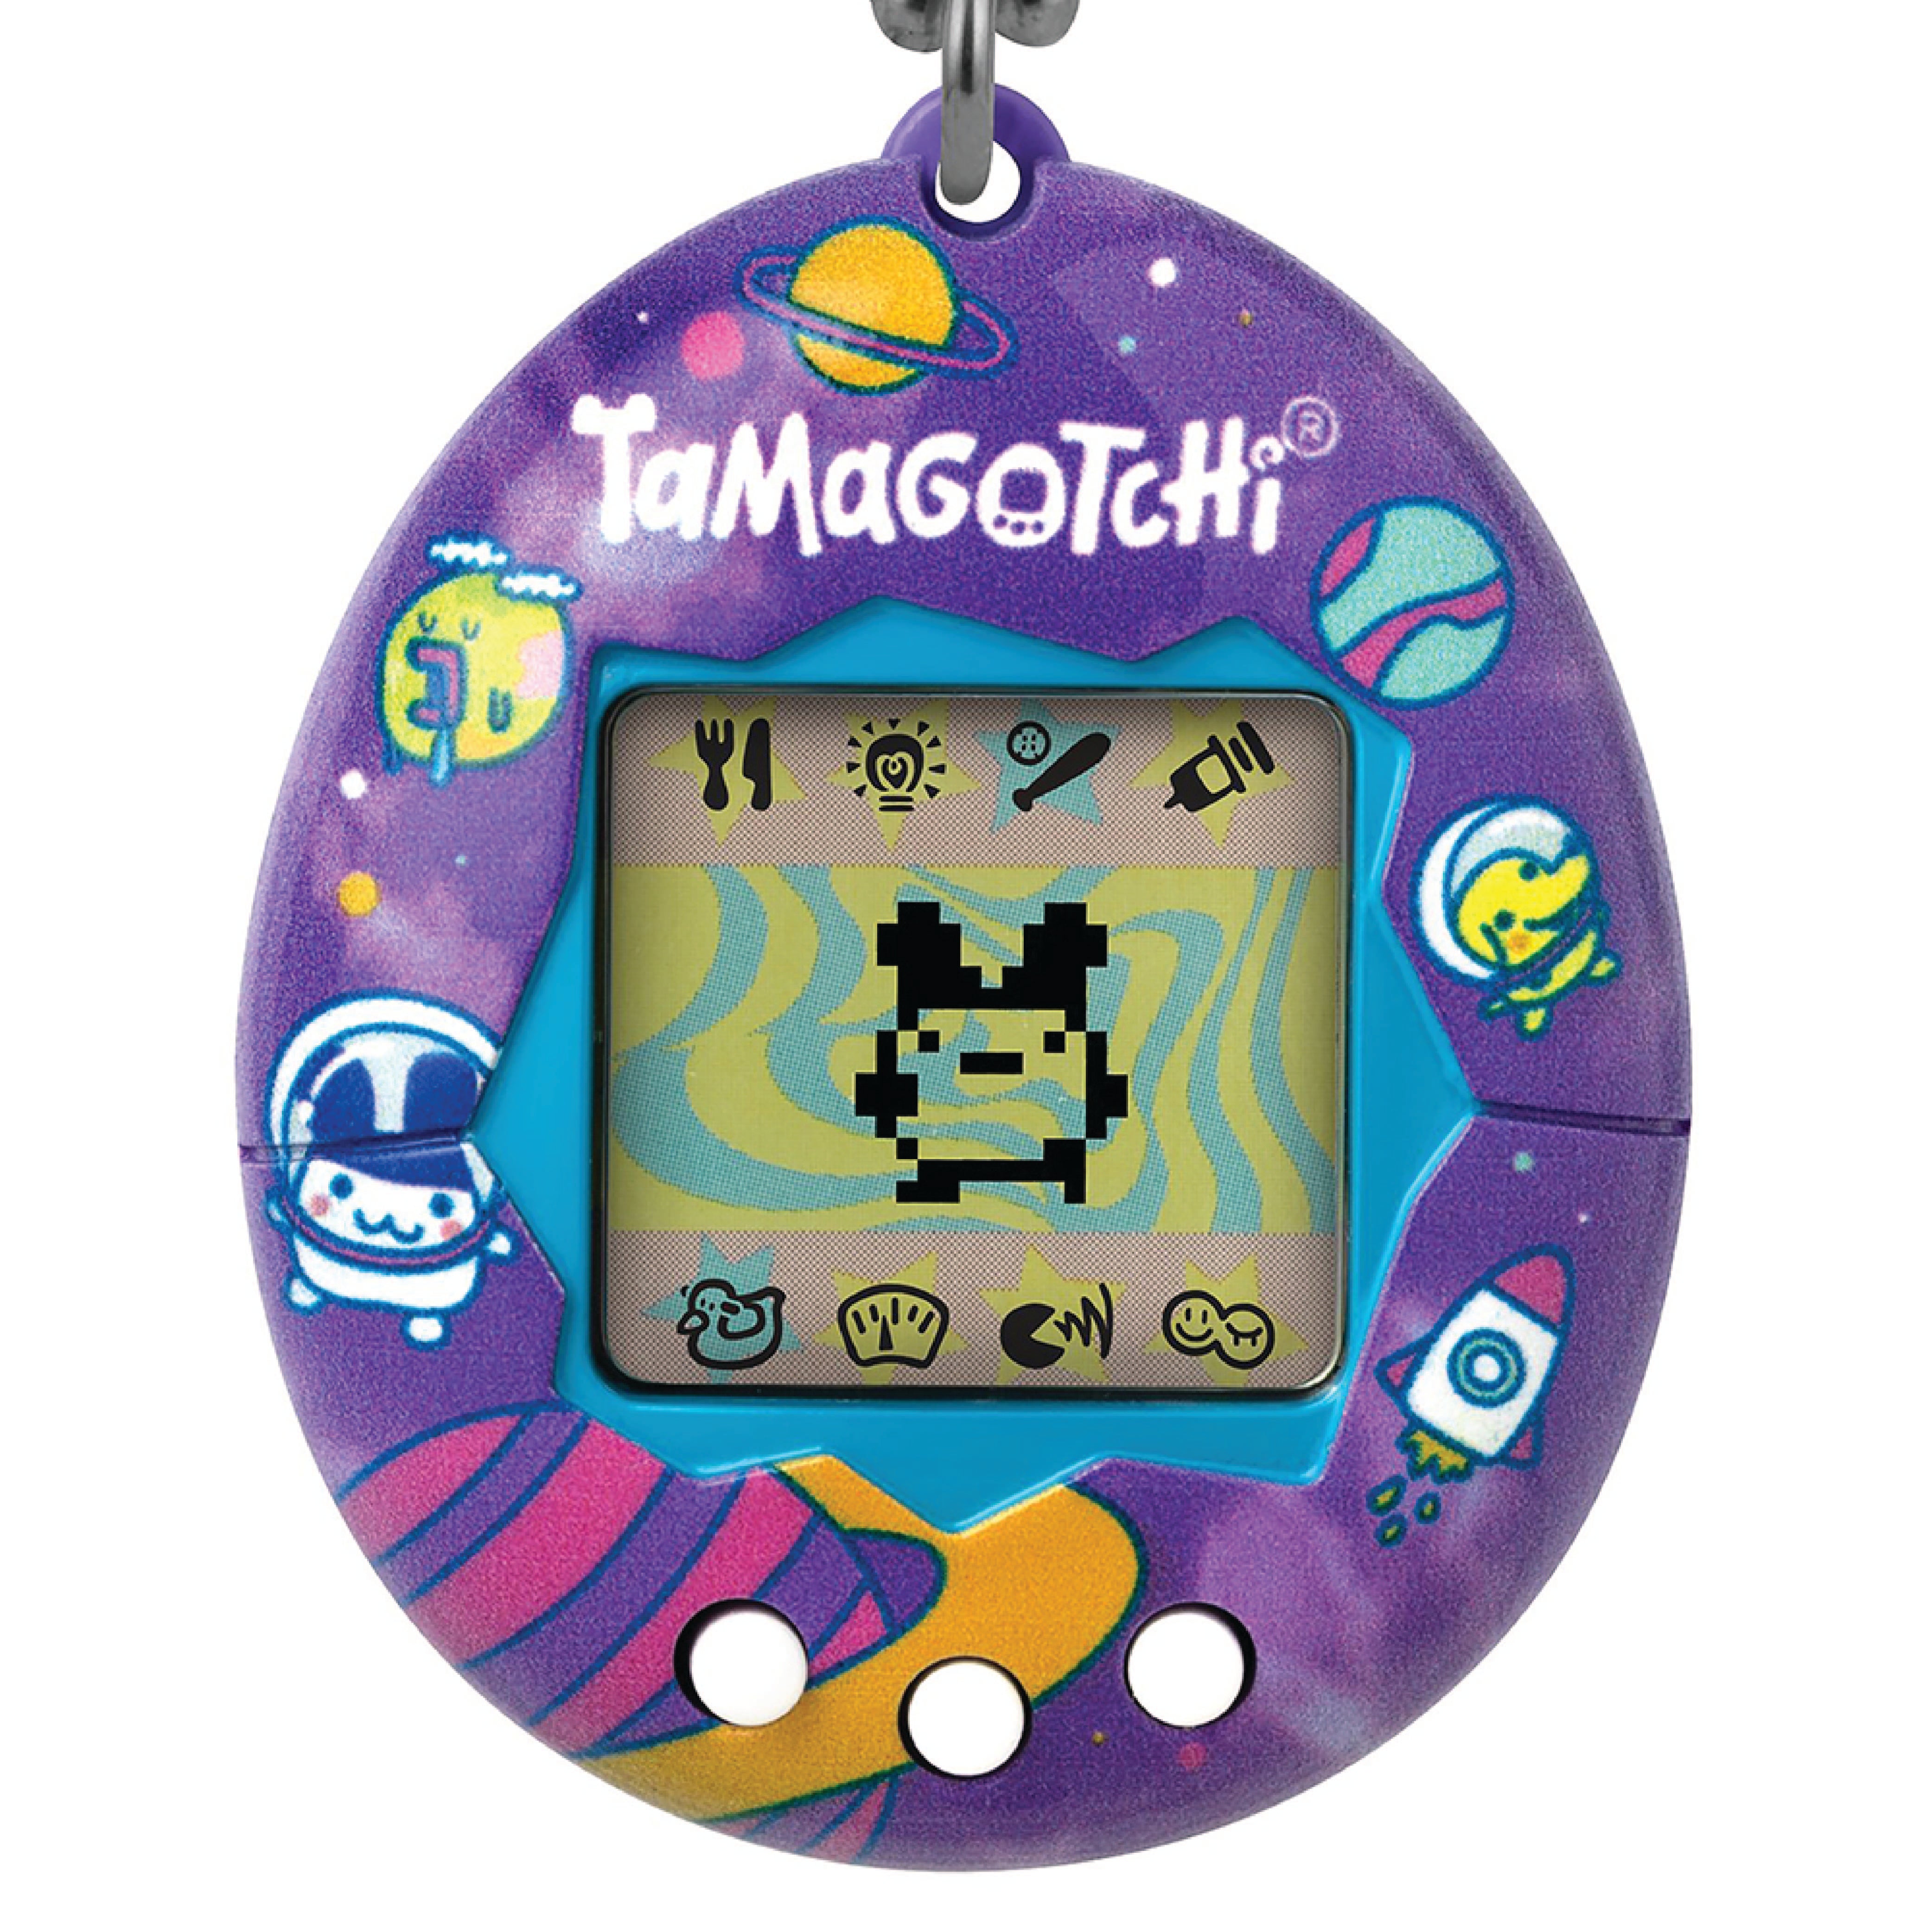 Original Tamagotchi – Tama Universe